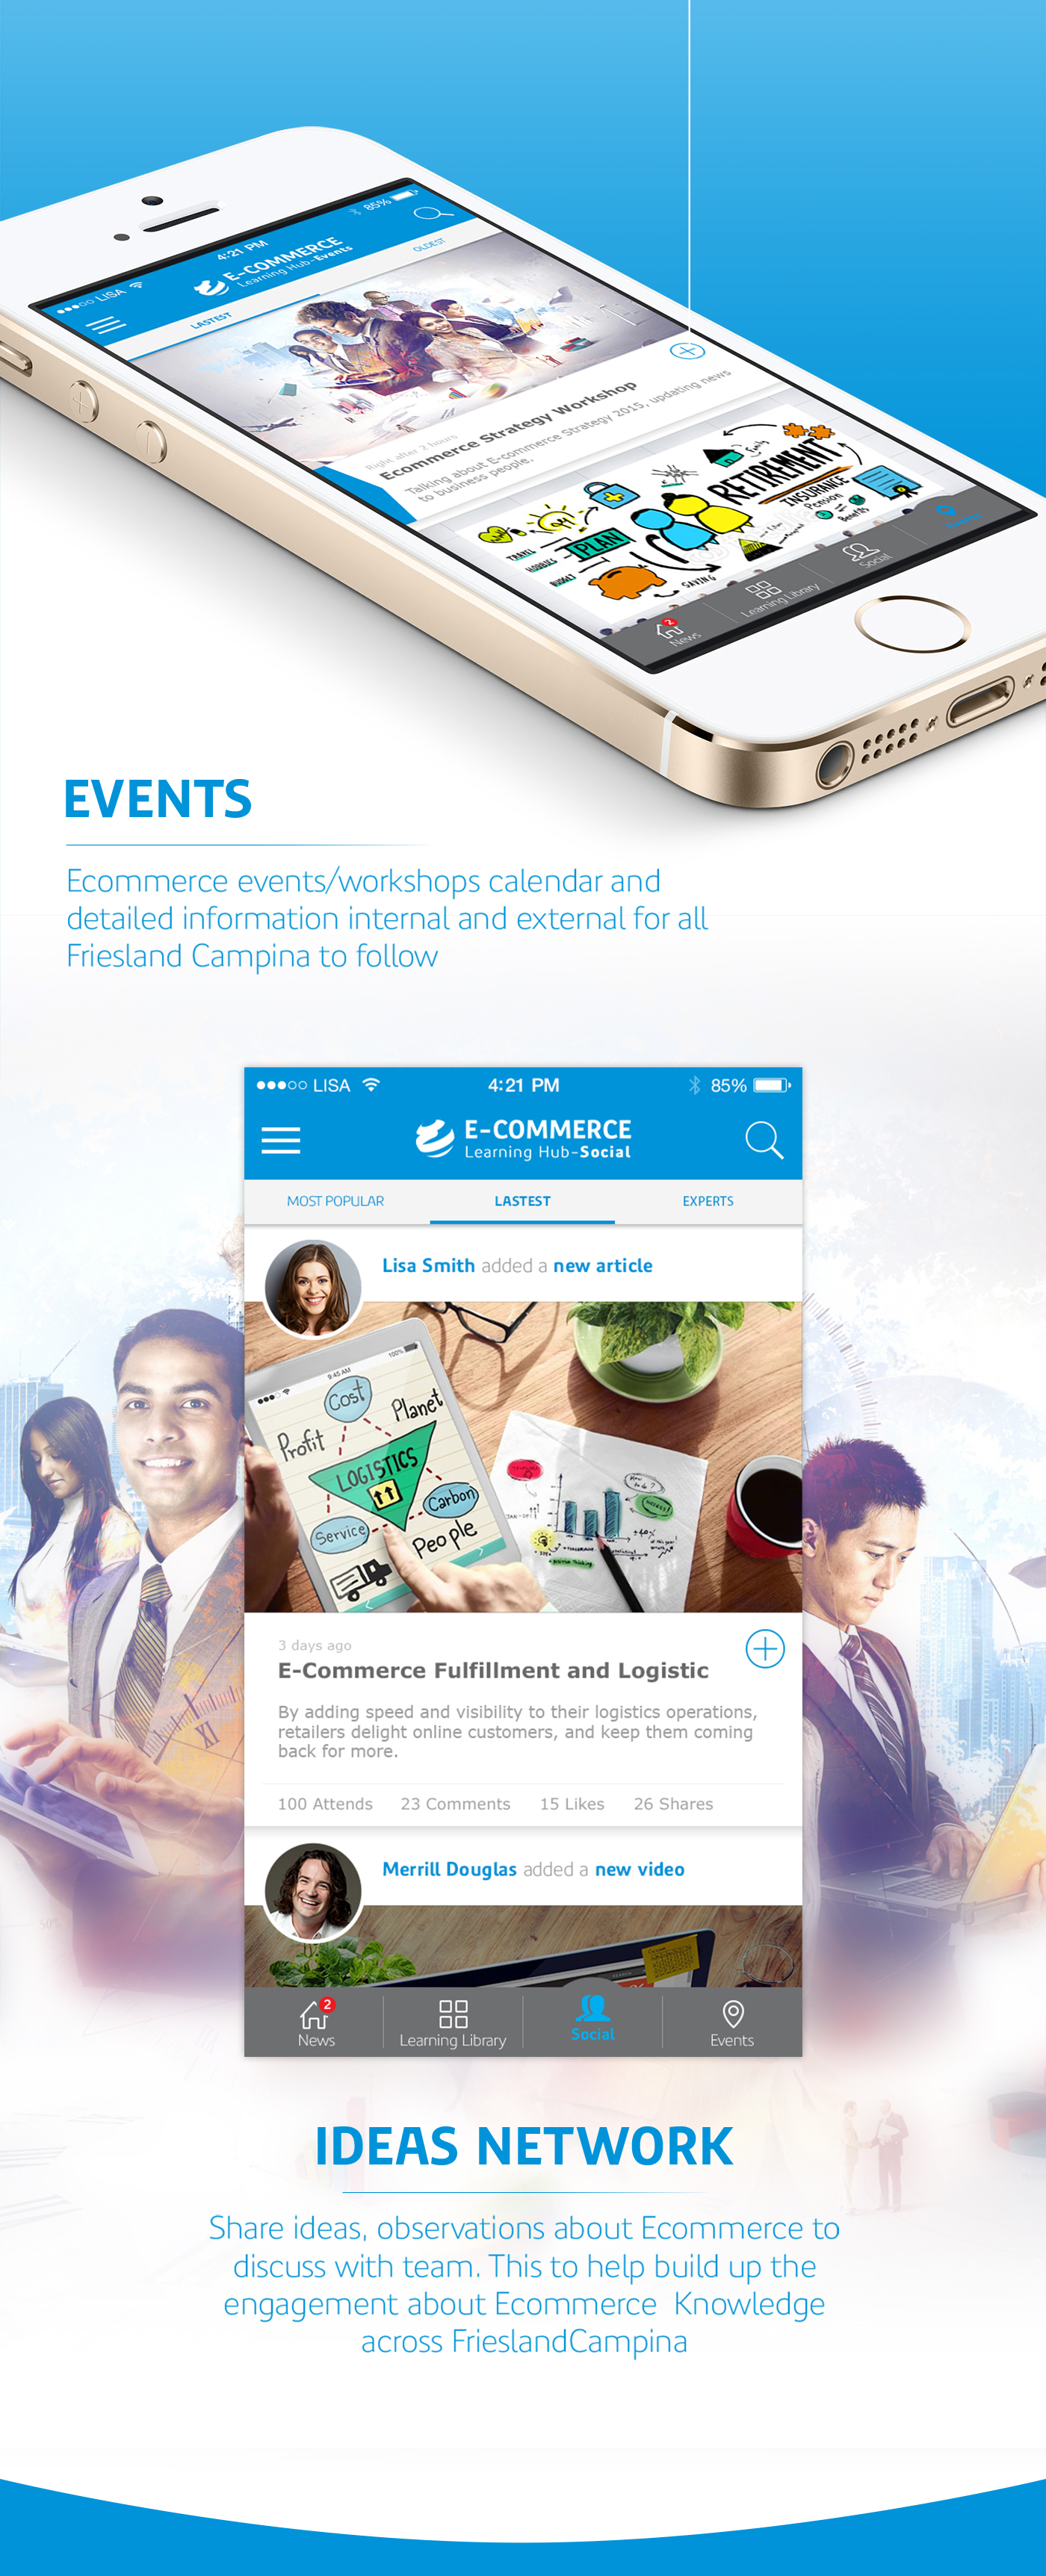 E-commerce Learning Hub Friesland Campina application design